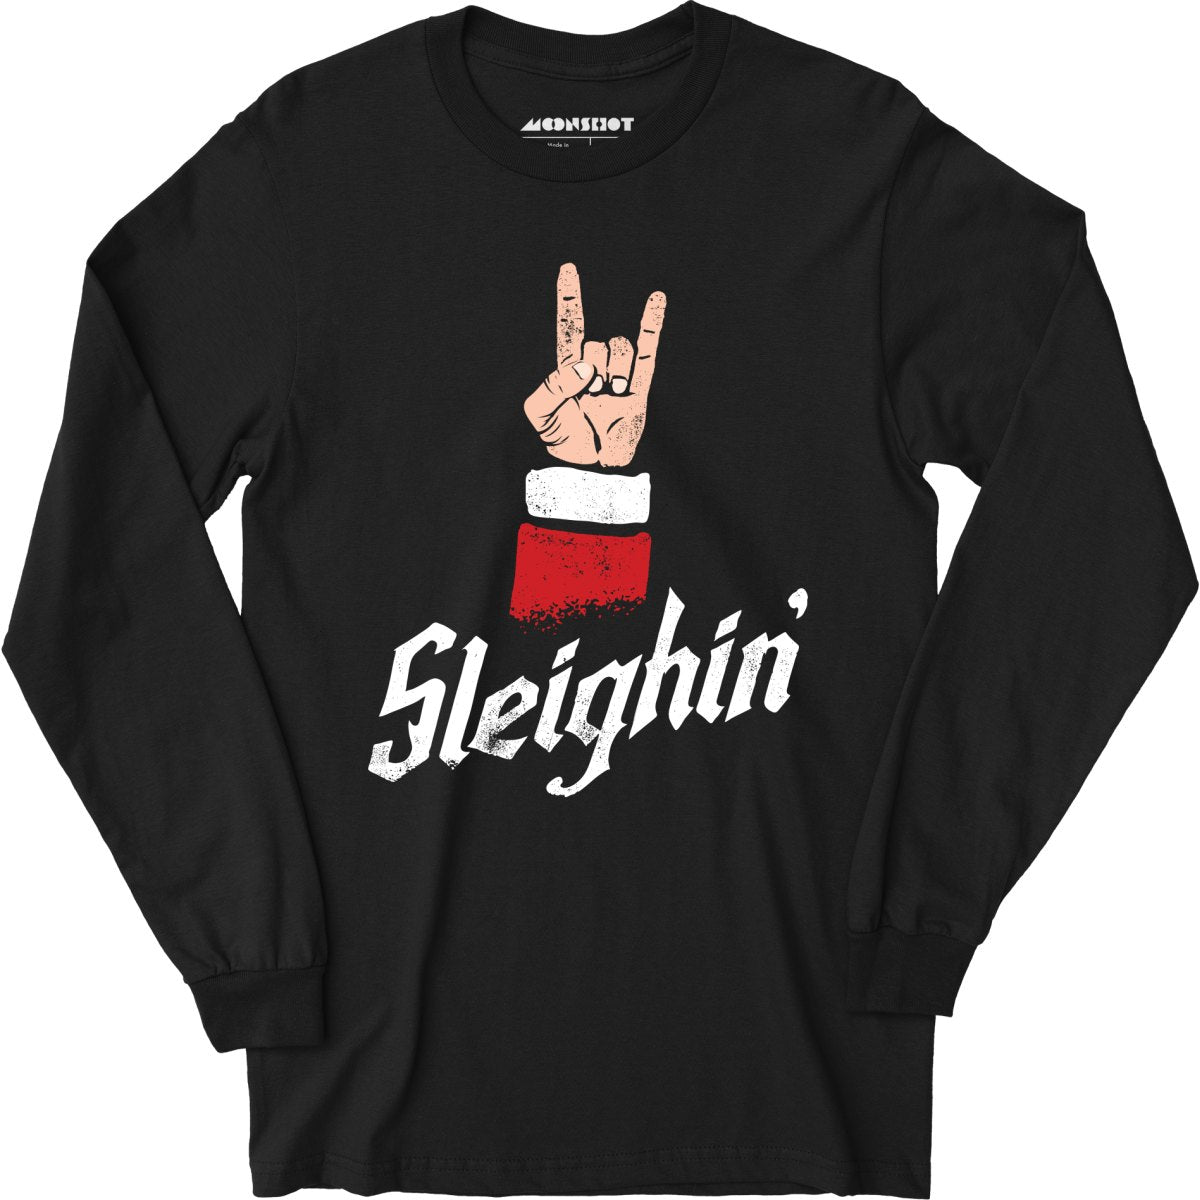 Sleighin' - Long Sleeve T-Shirt